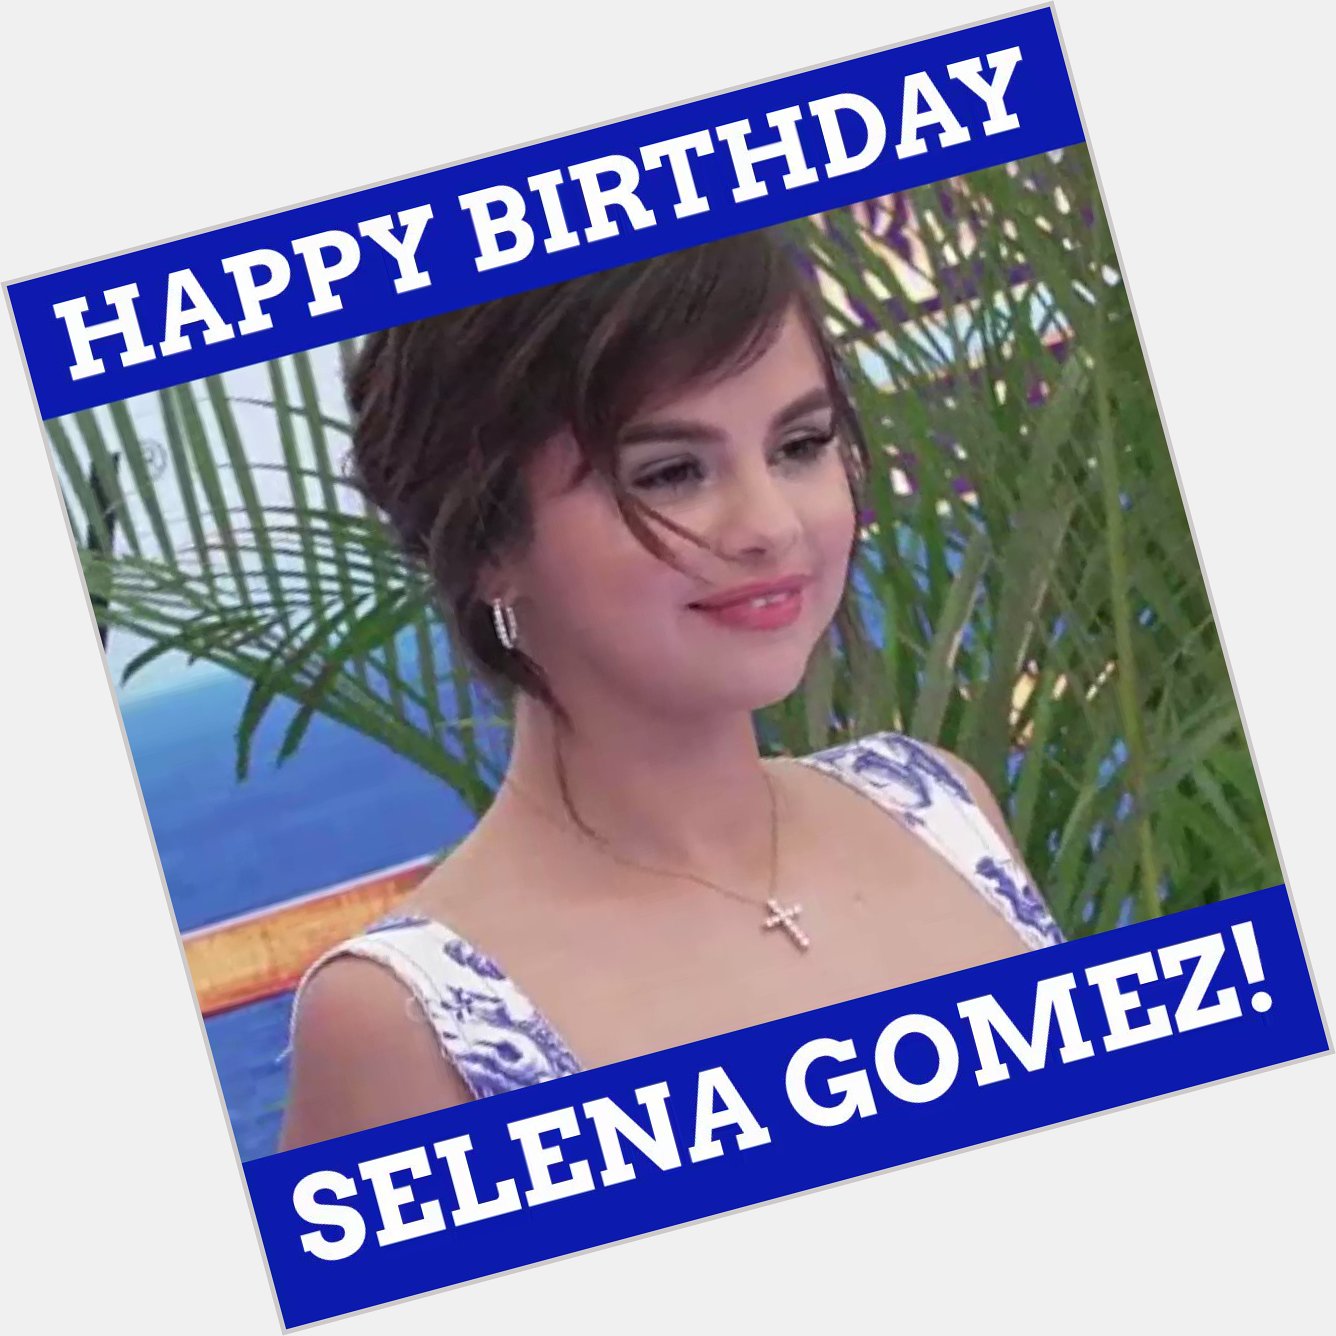 Happy Birthday, Selena Gomez!   